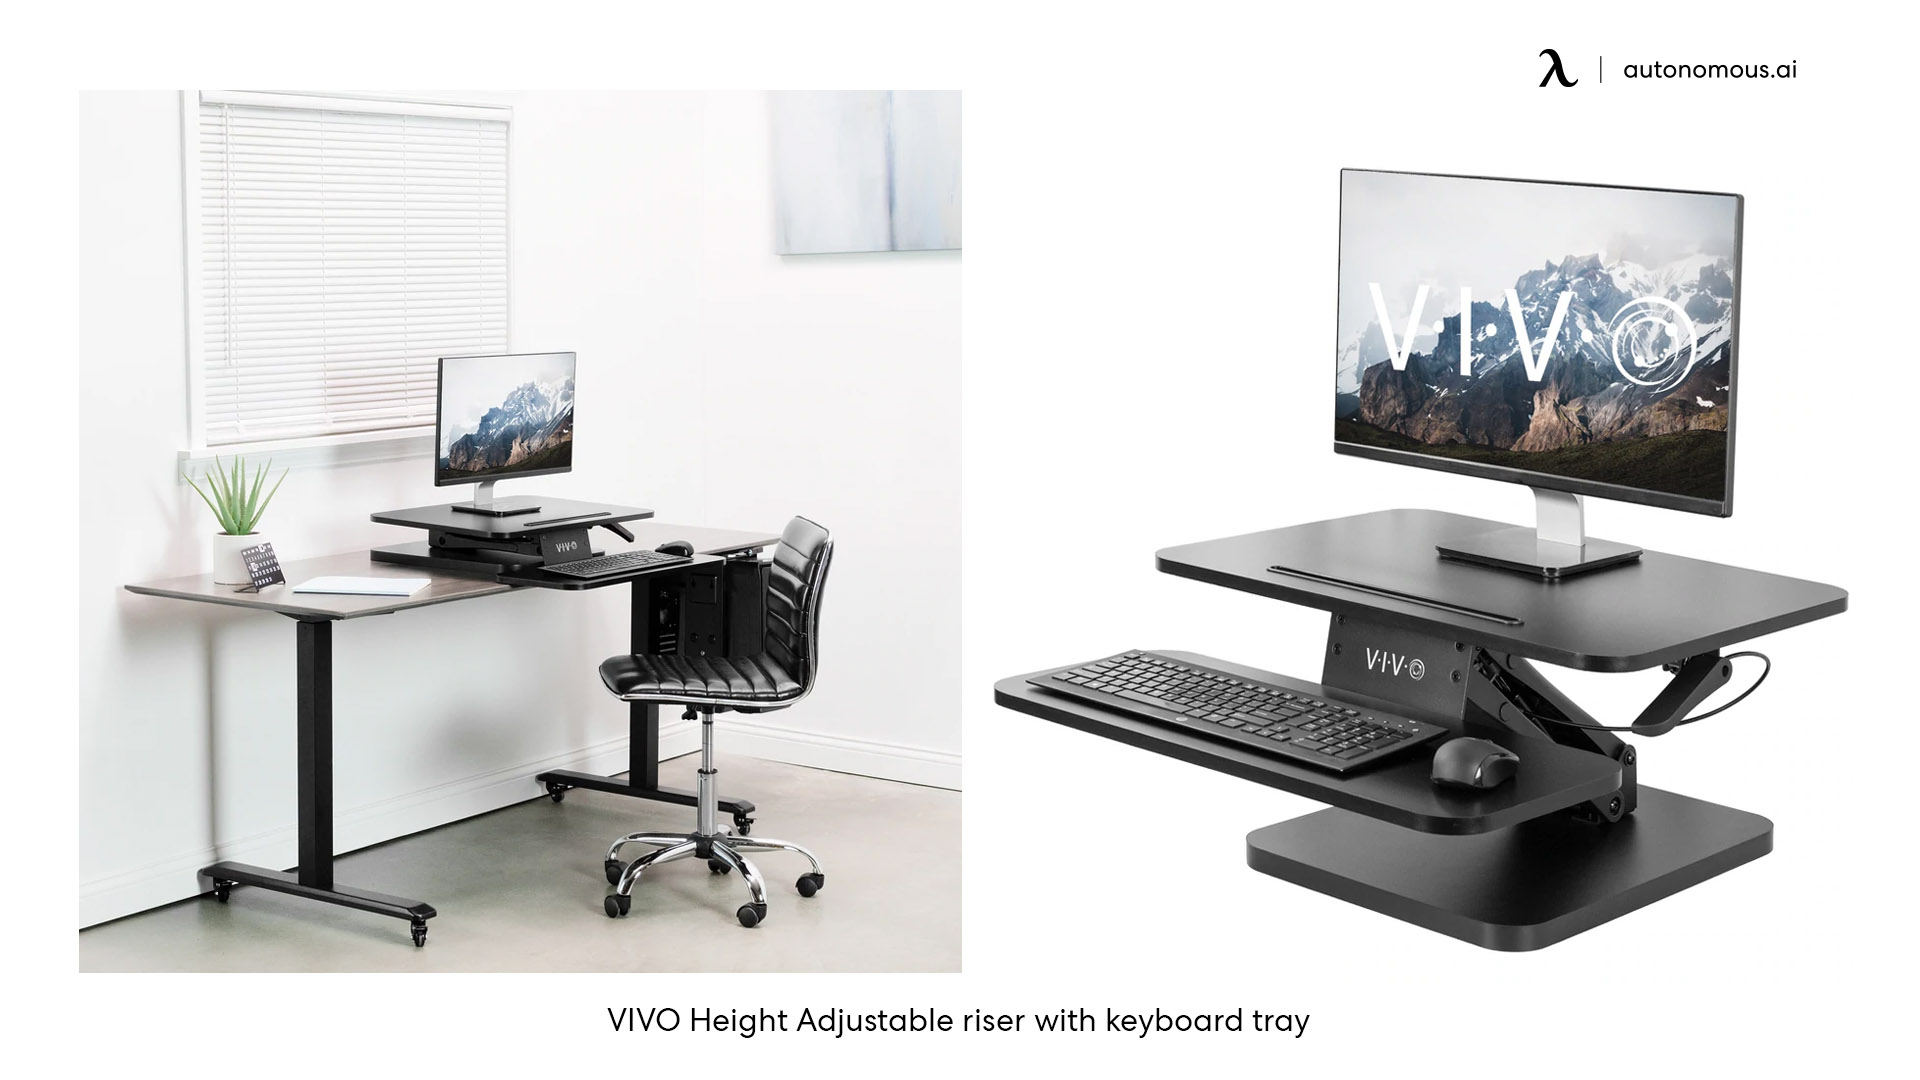 VIVO Height Adjustable black desk riser